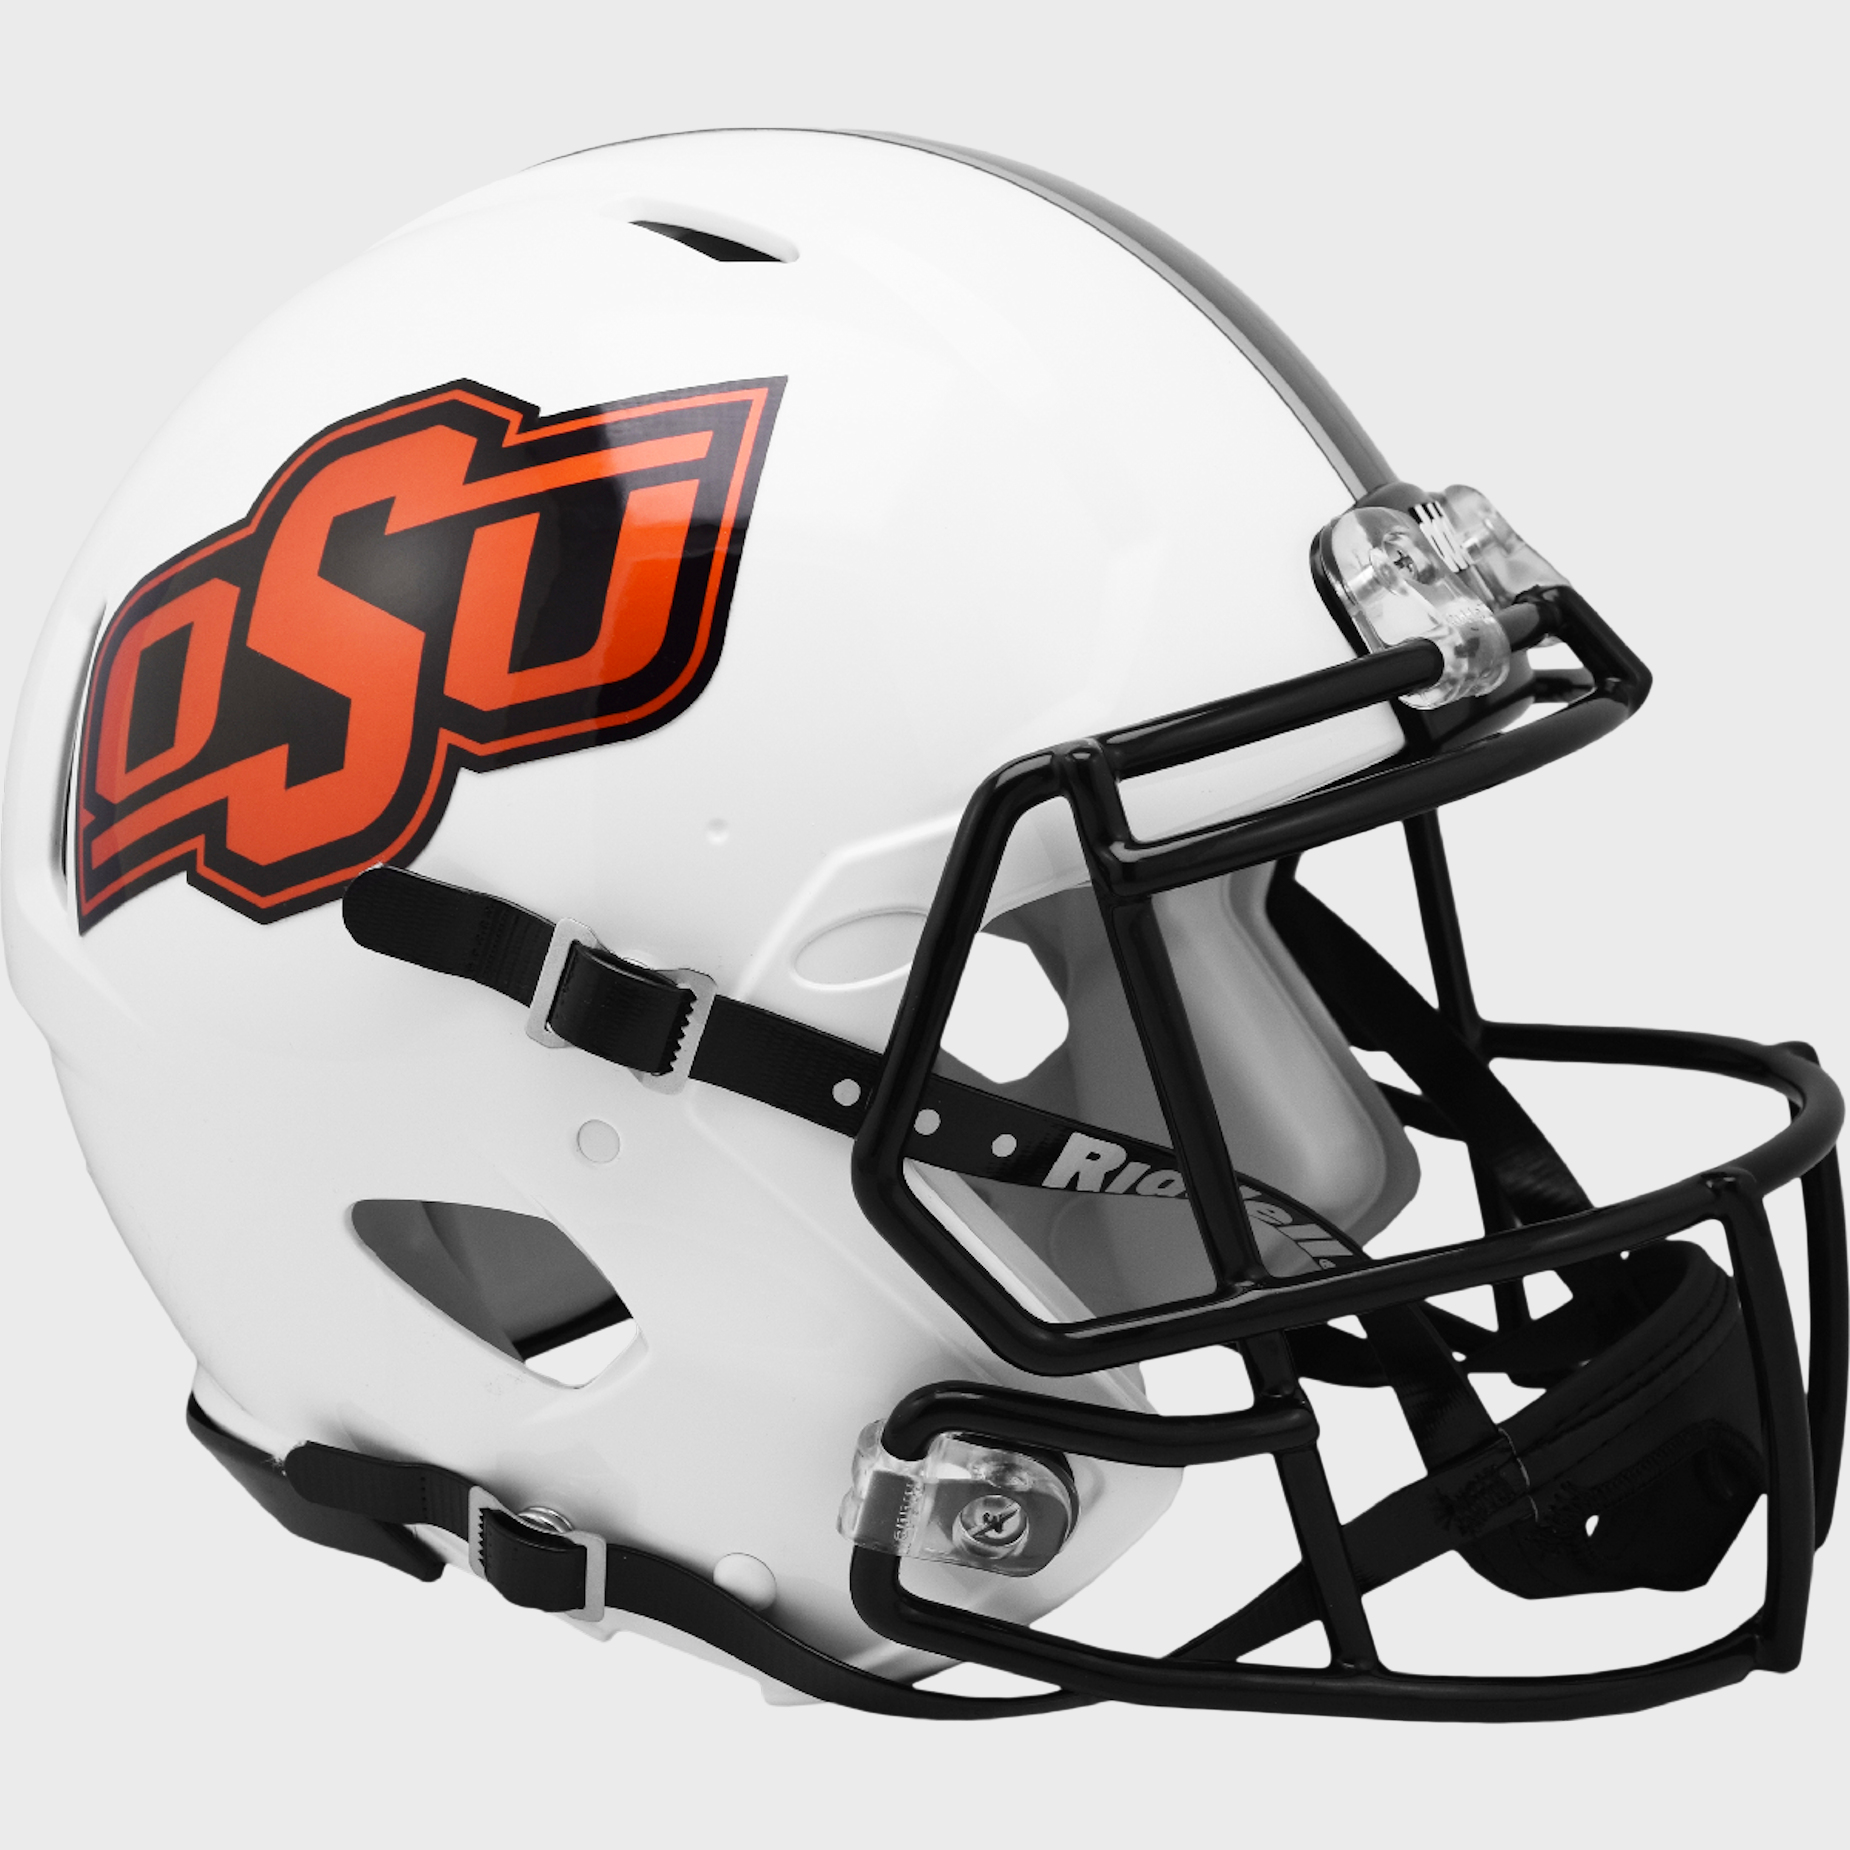 Oklahoma State Cowboys authentic full size helmet